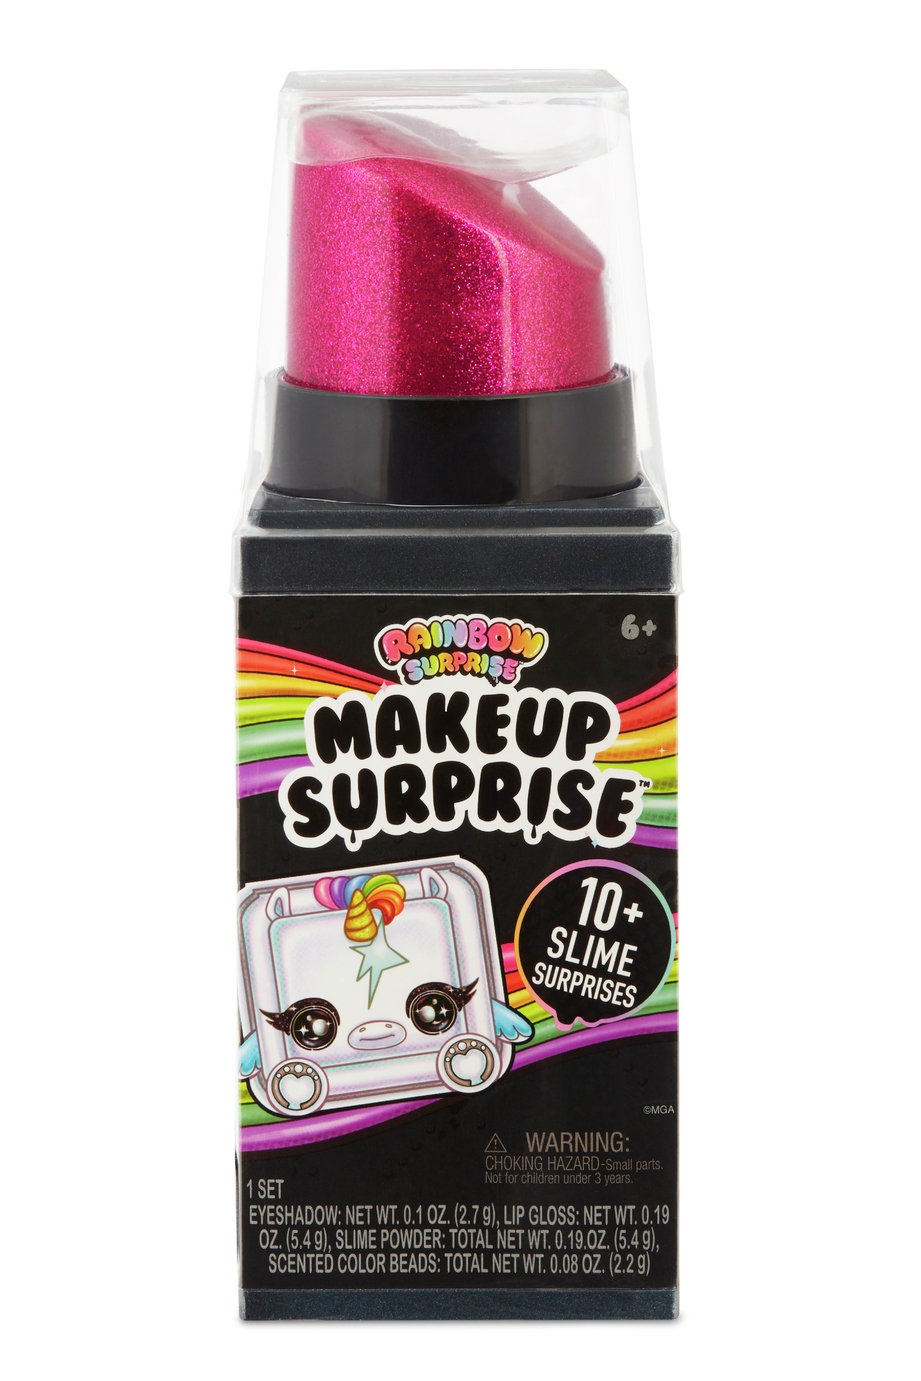 Poopsie Rainbow Surprise Makeup Surprise Playset Review